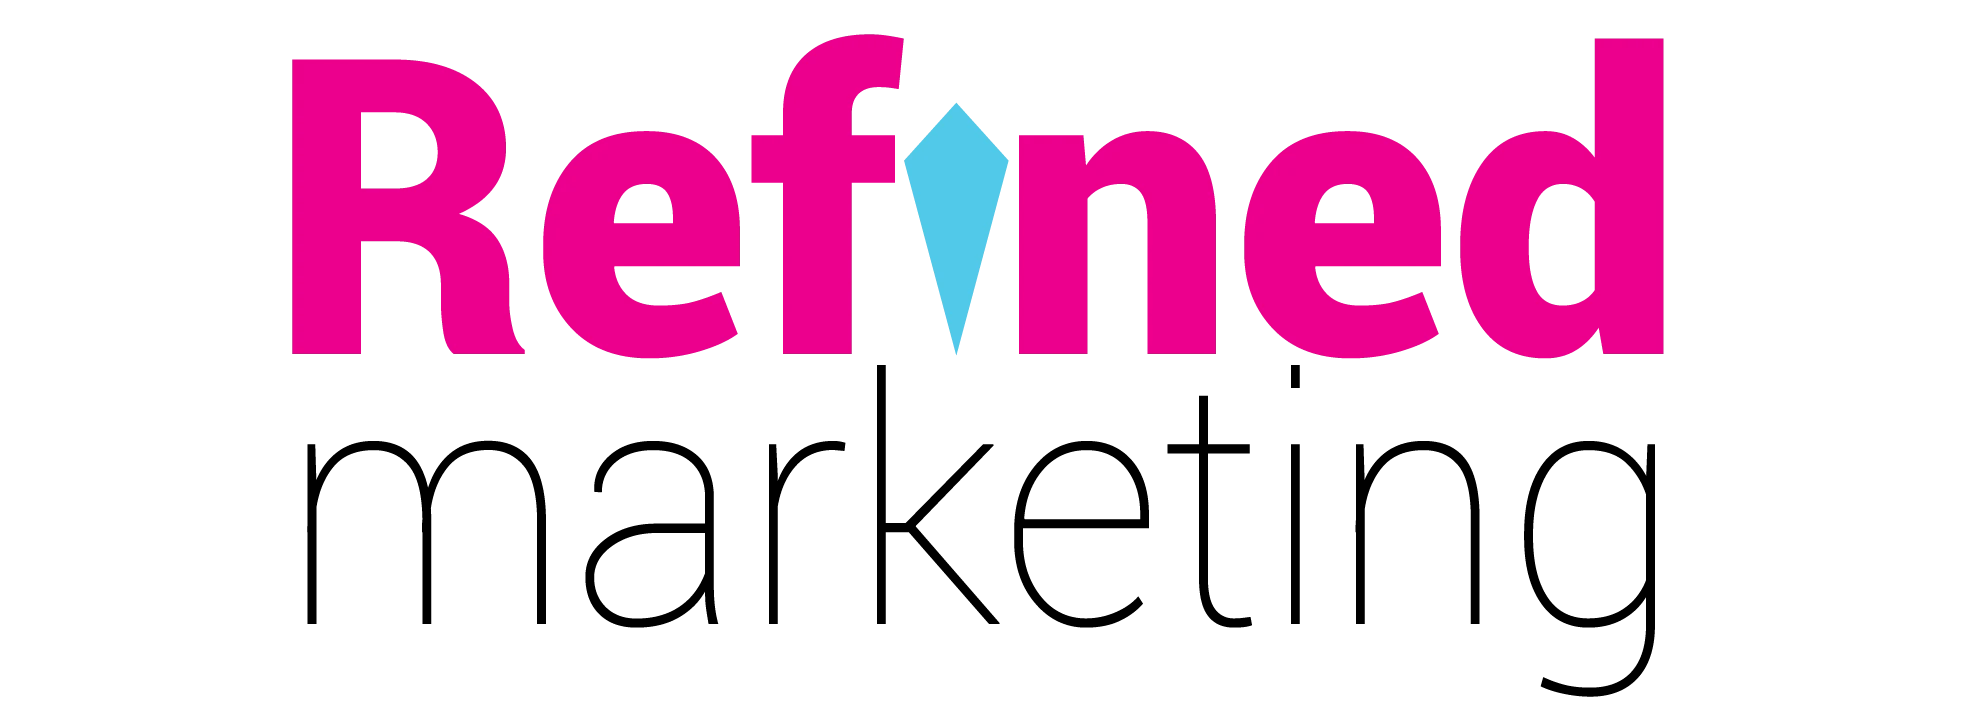 Refined Marketing Logo